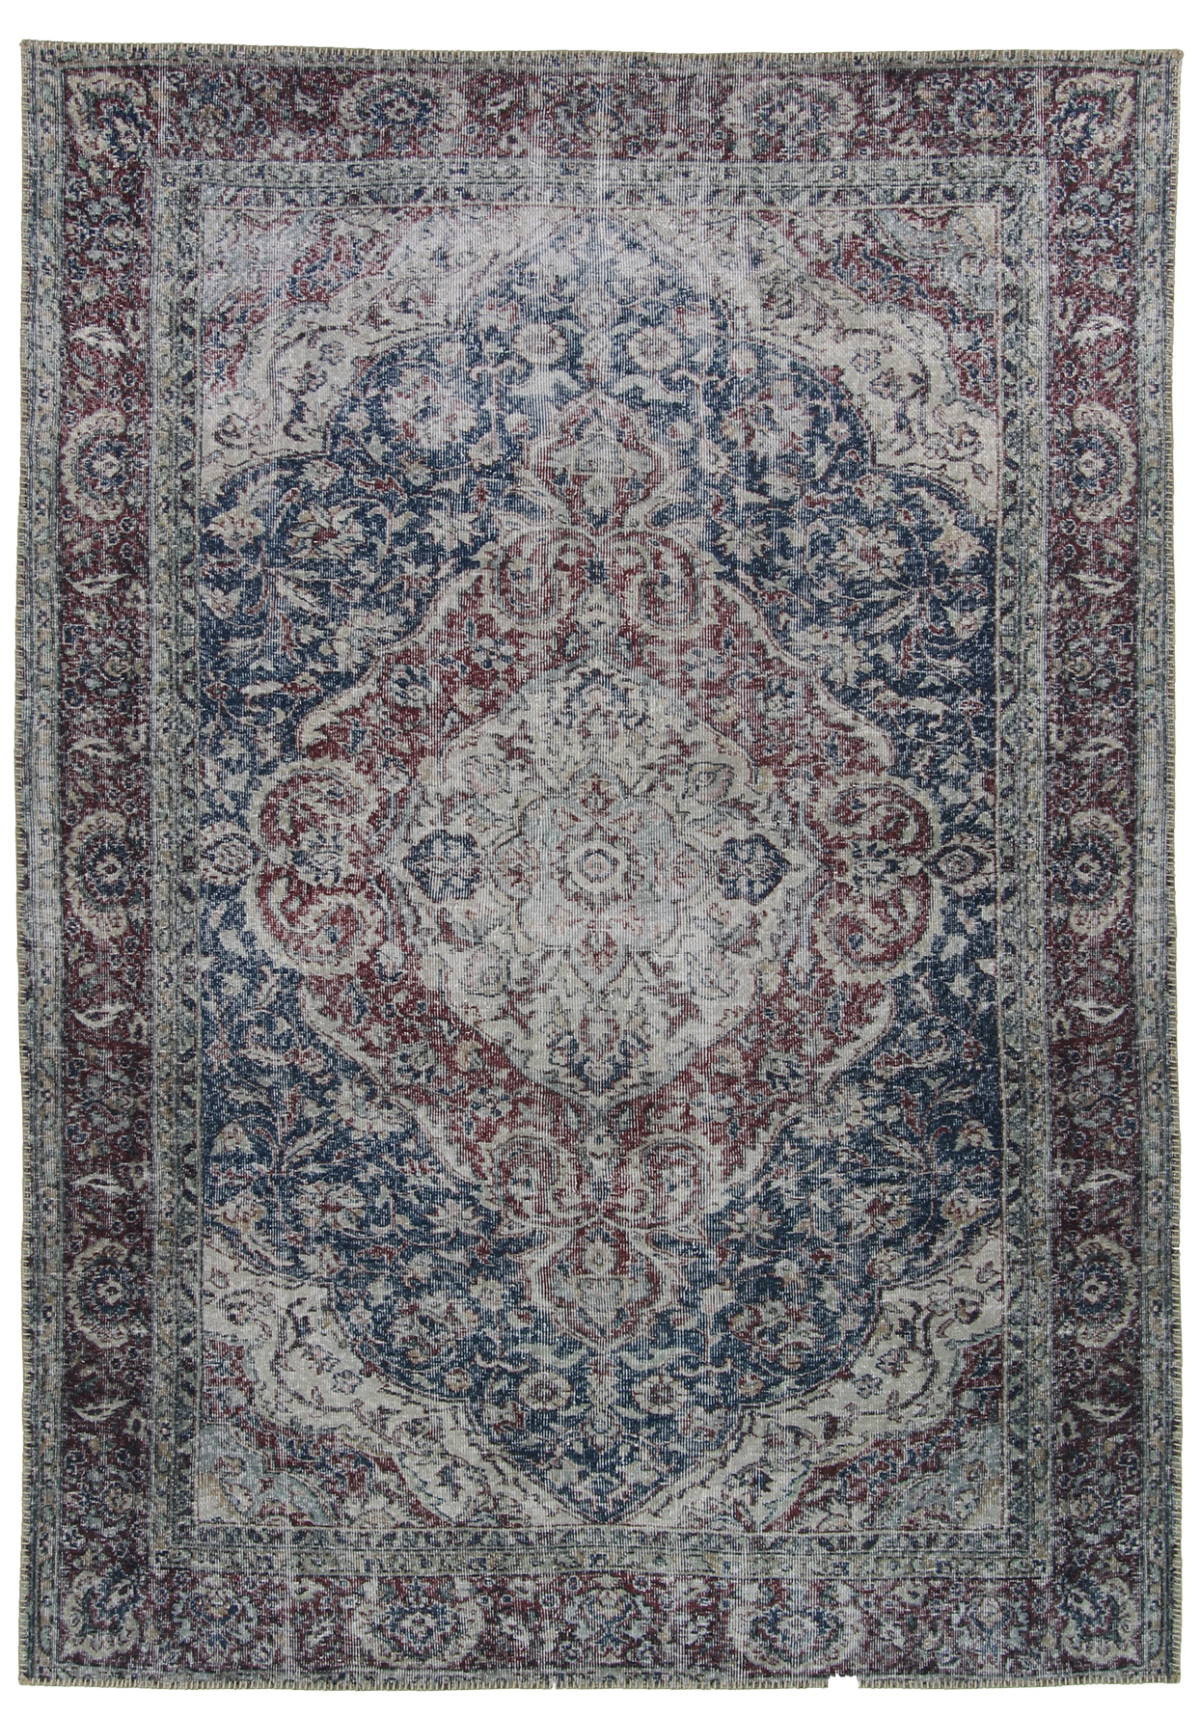 Brinker Carpets - Festival Xotin Classic - 160x230 cm Vintage Vloerkleed